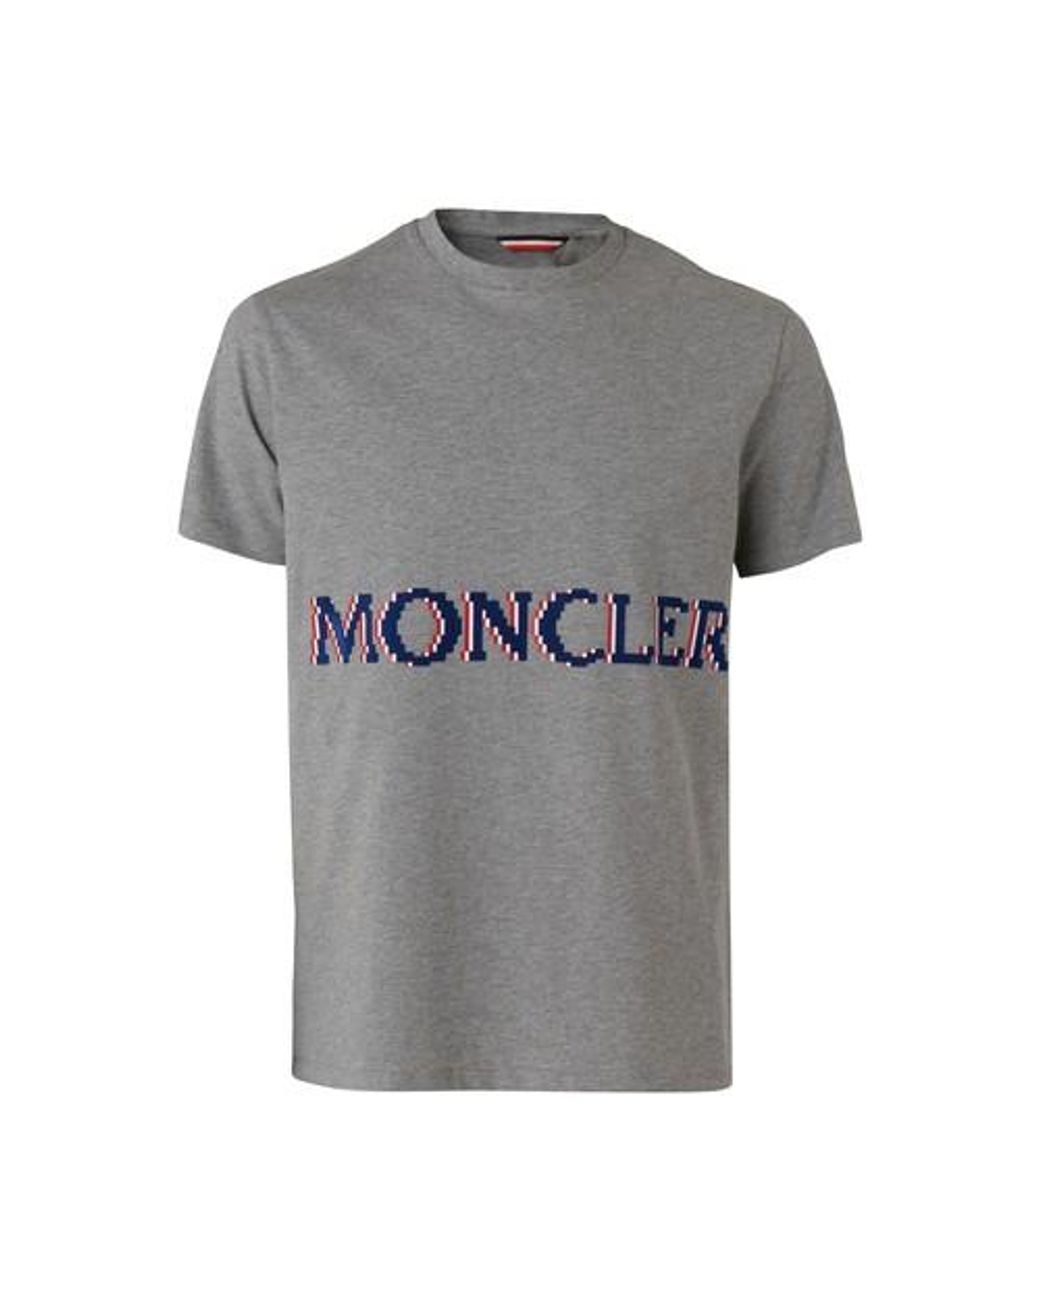 Moncler Genius Cotton 1952 - T-shirt in Grey (Gray) for Men - Lyst